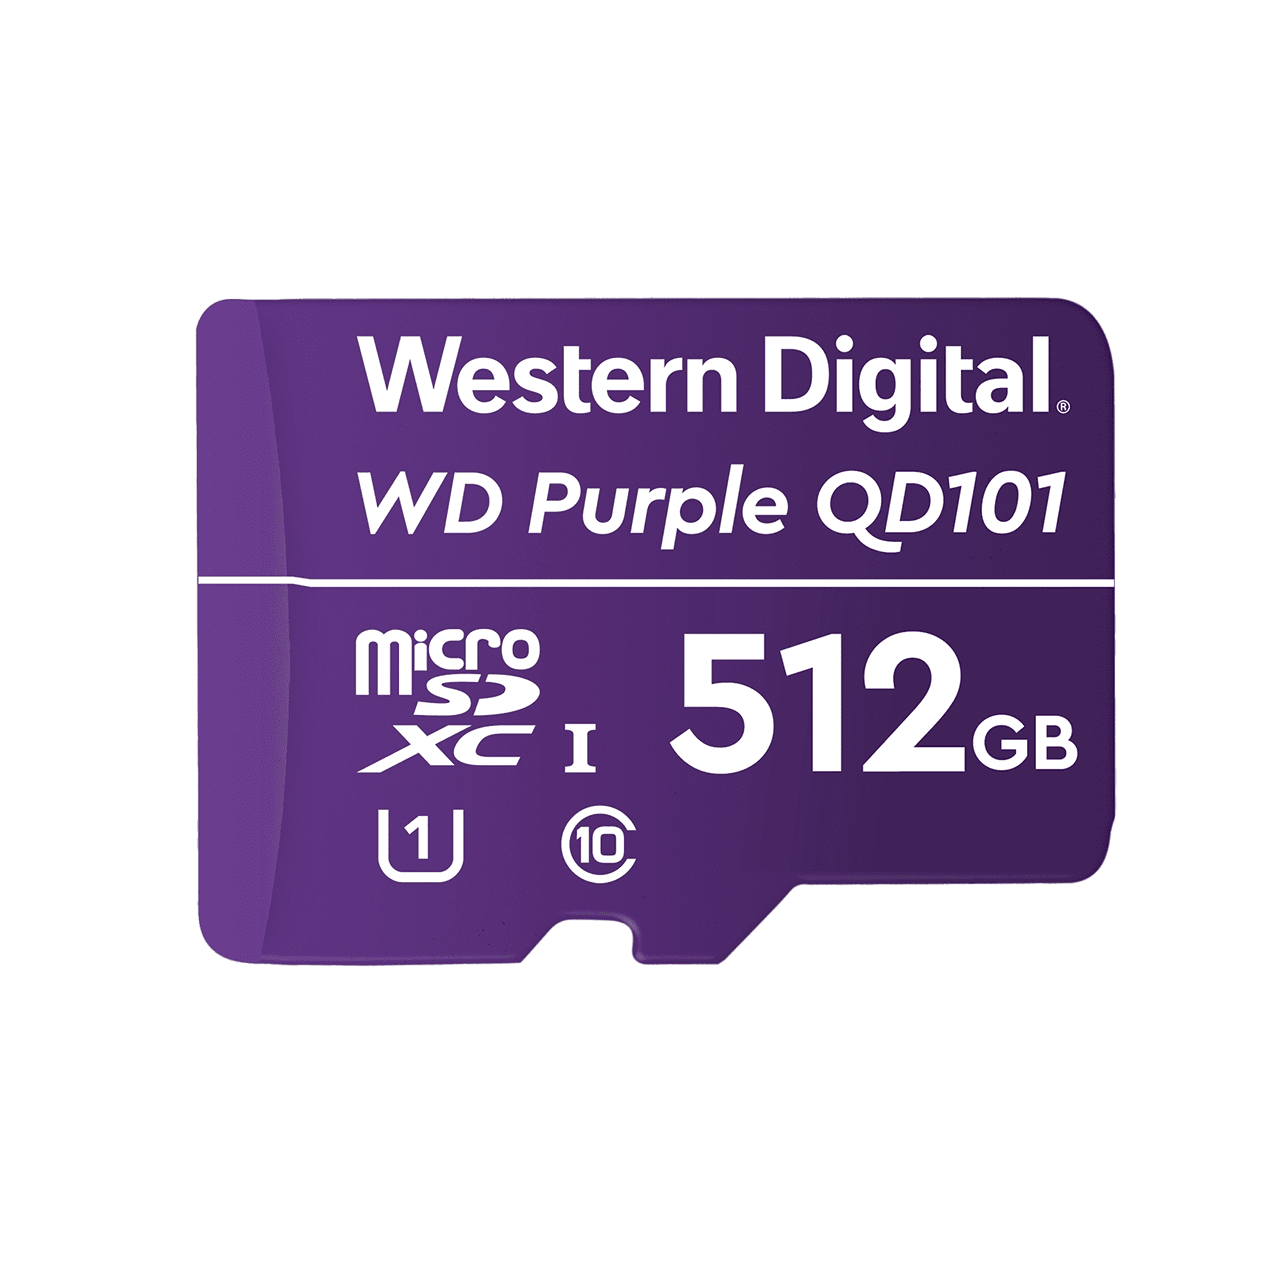 WD Western Digital Purple 512GB microSD Surveillance SC QD101